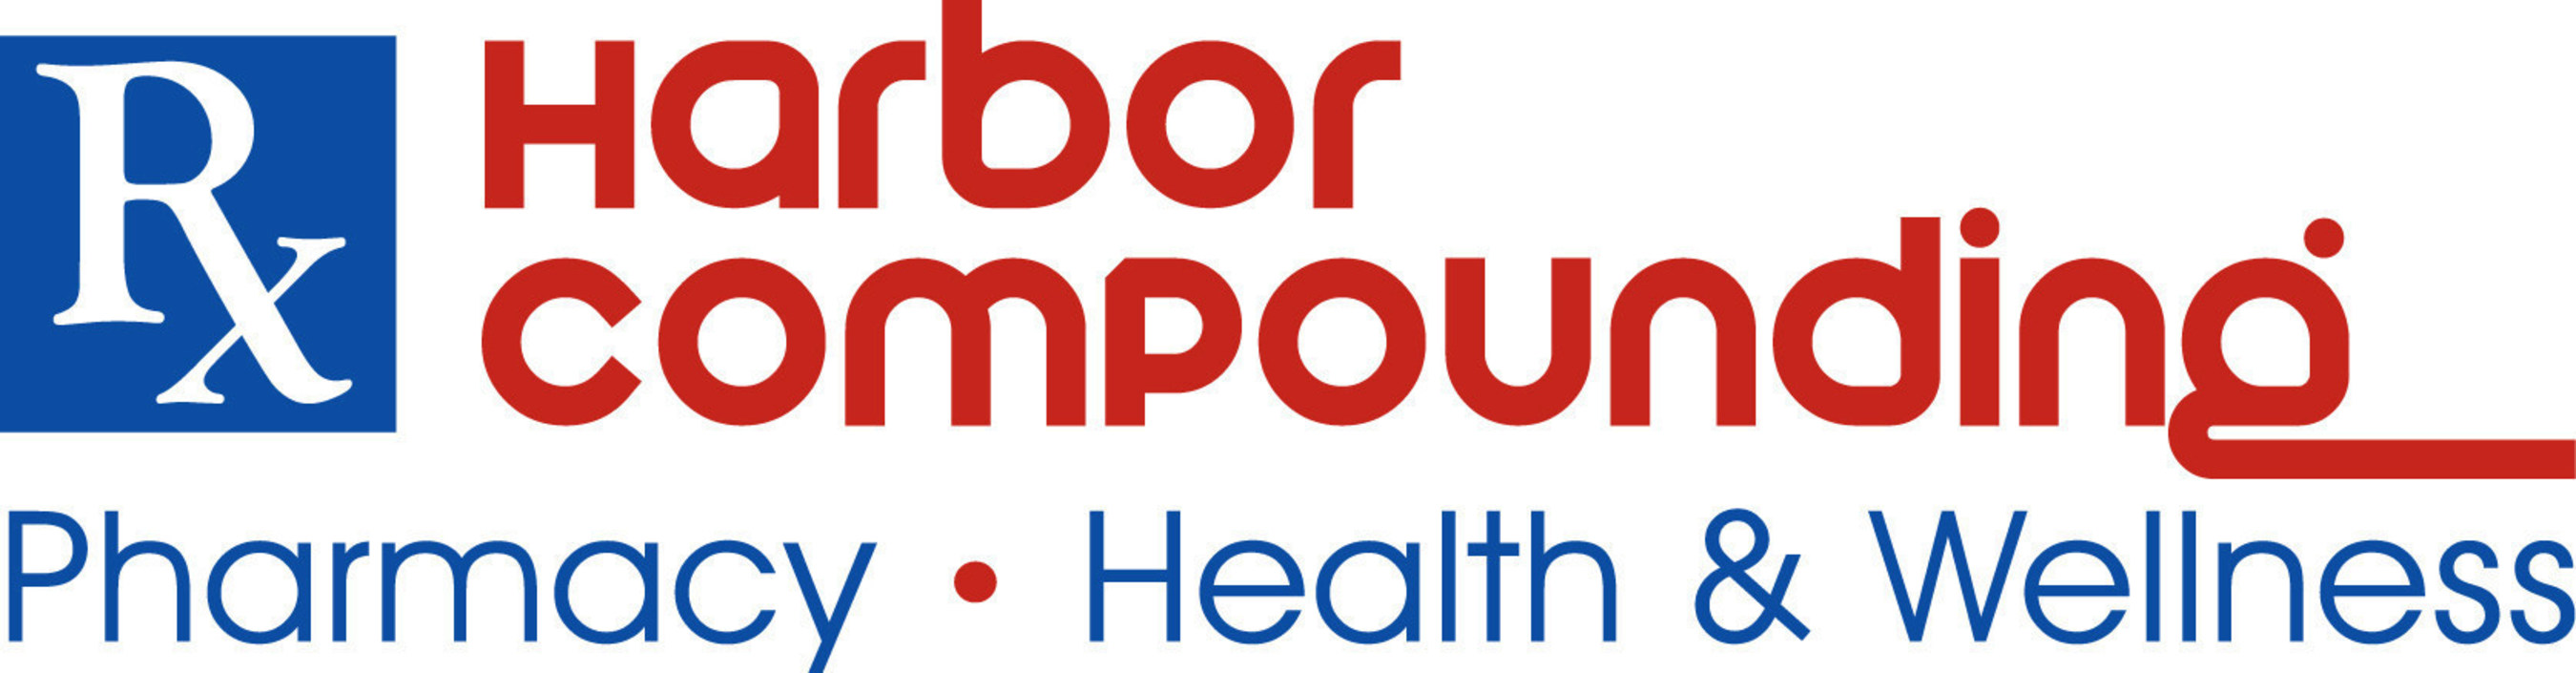 Harbor Compounding Pharmacy Announces 2nd CME Sponsored Seminar for the  Rhythmic Restoration of Hormones